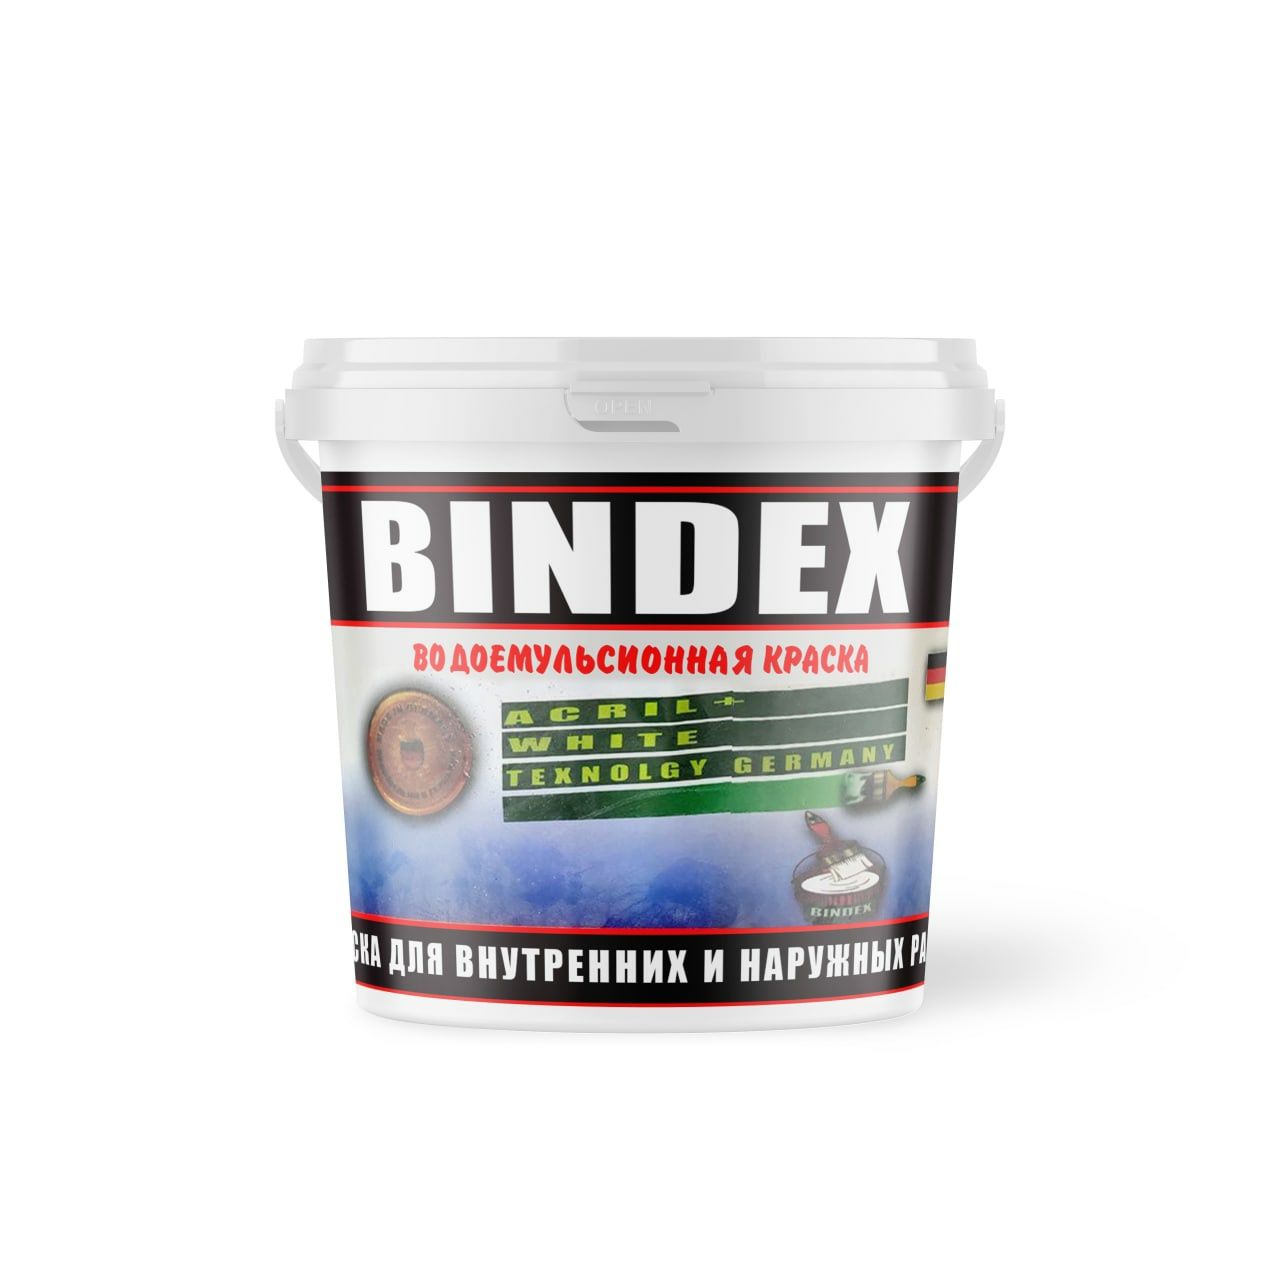 Bindex emulsiya original